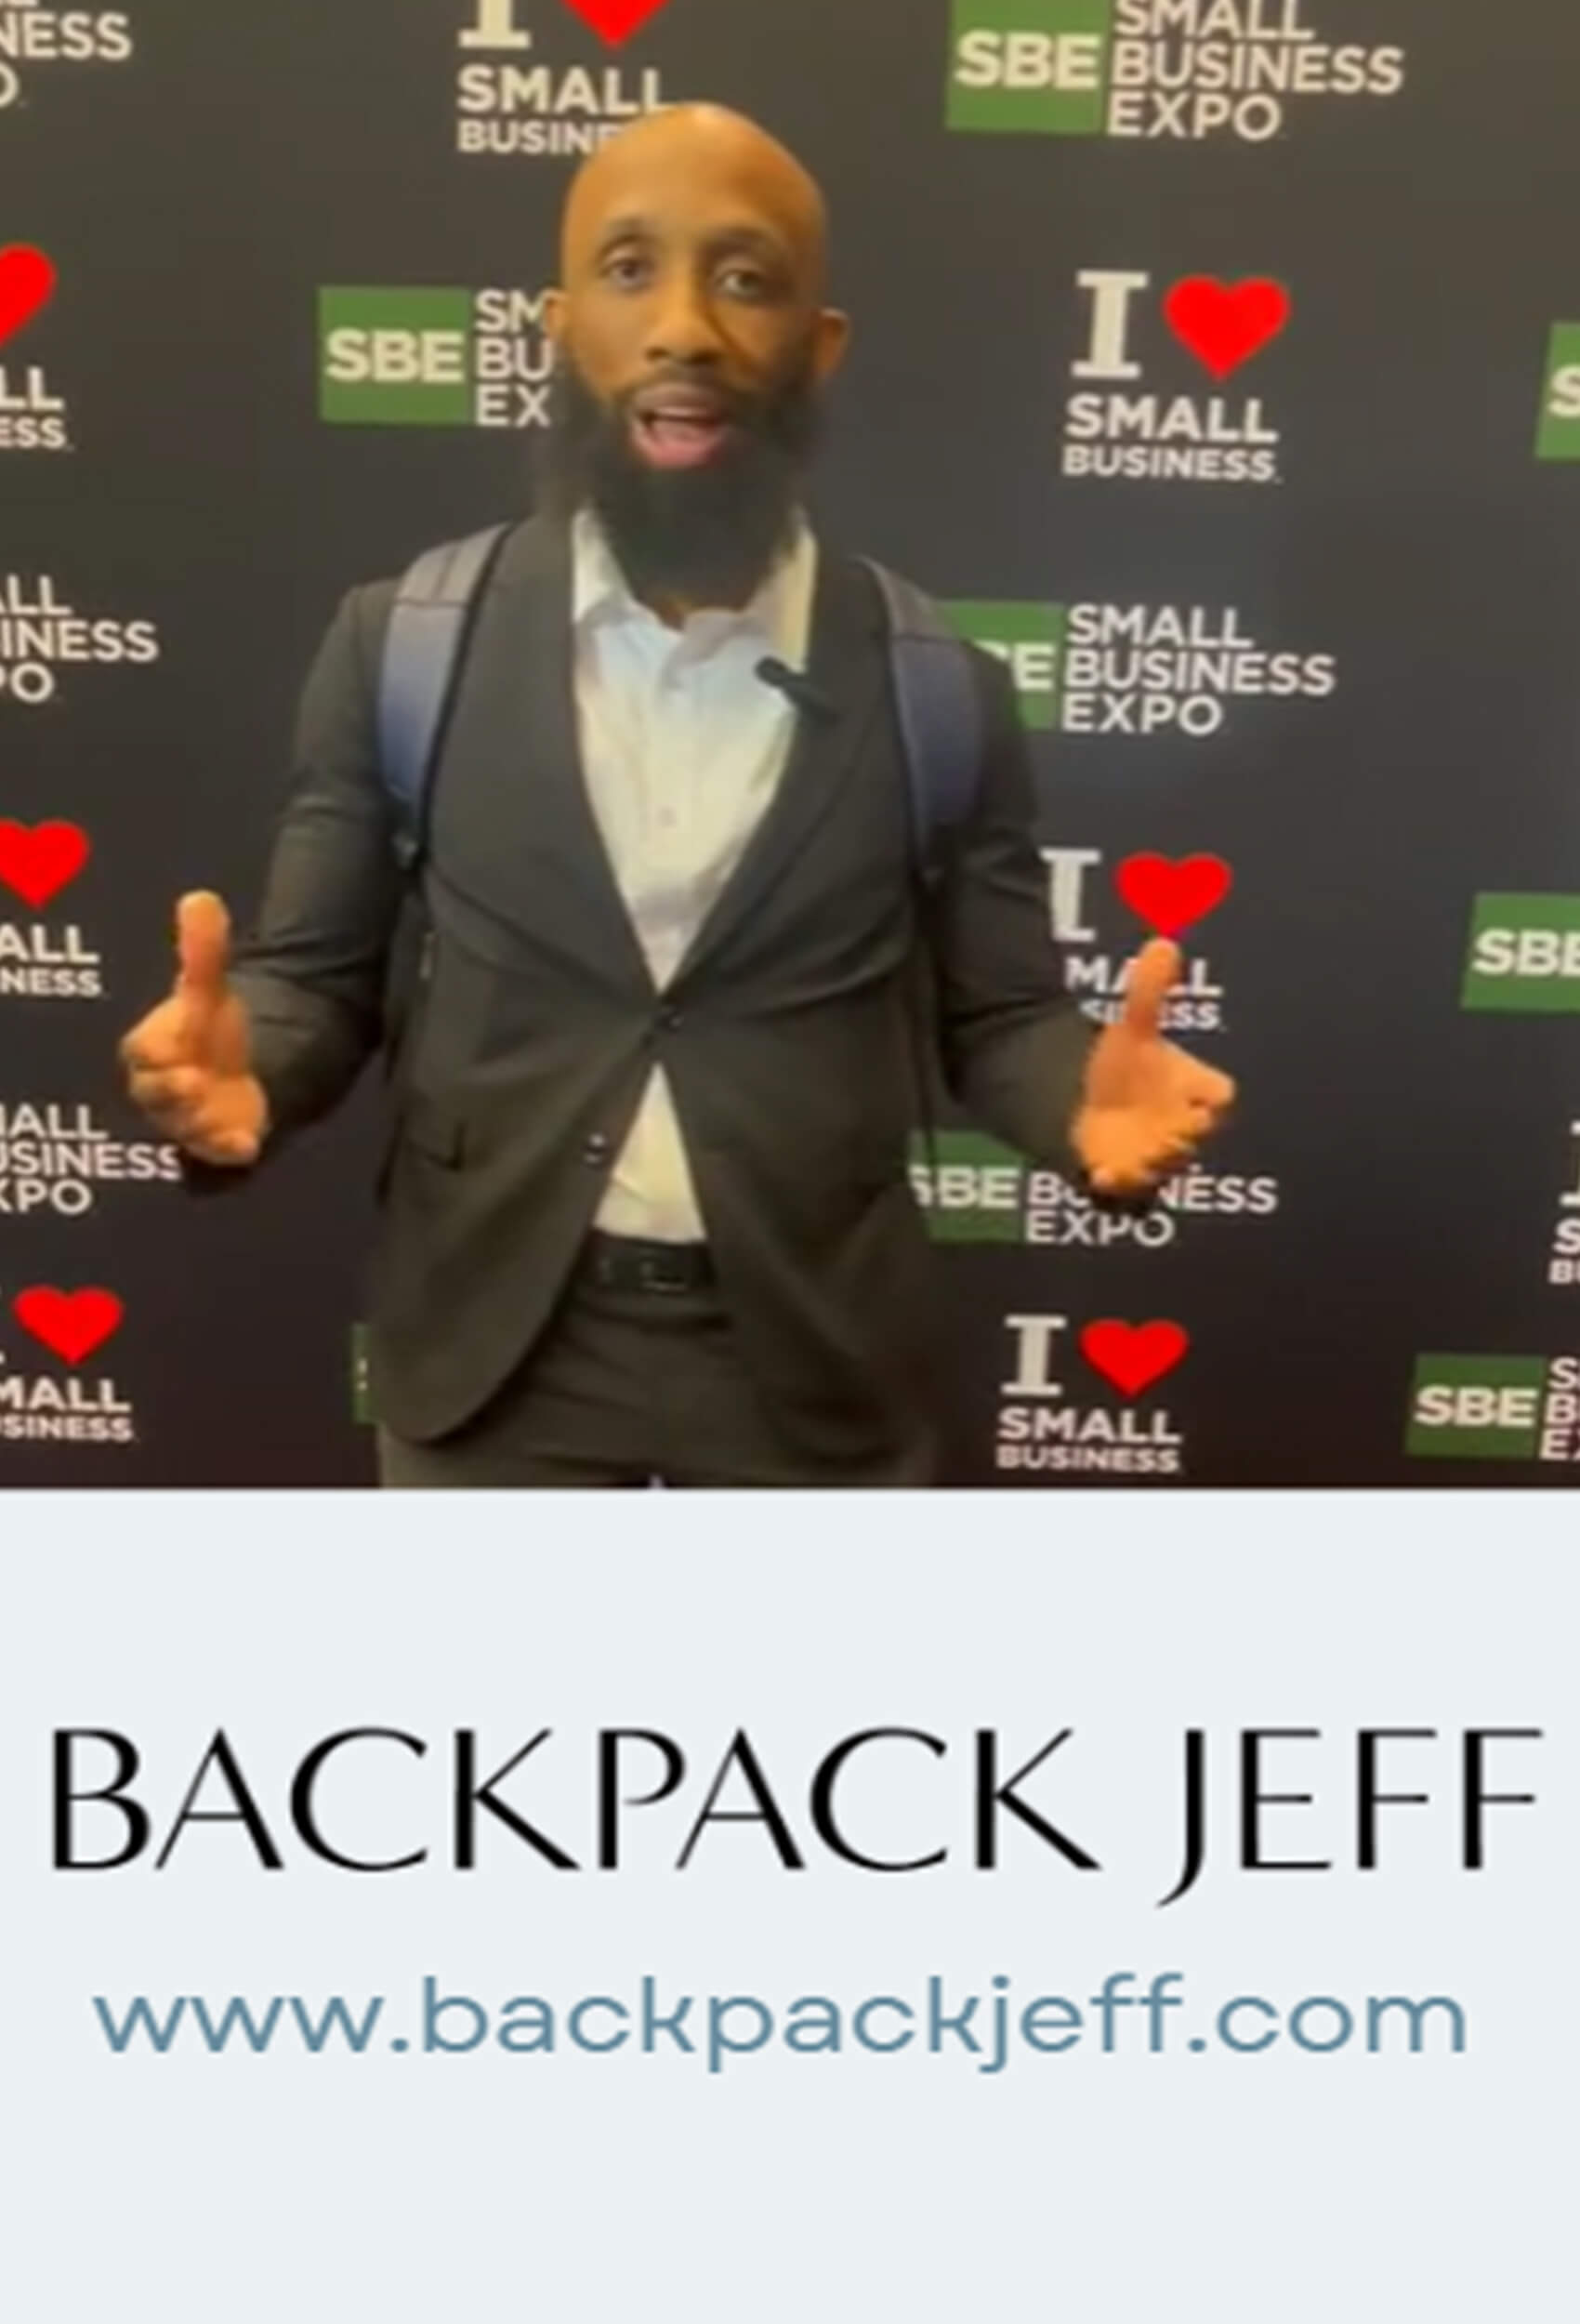 BACKPACK JEFF Short video